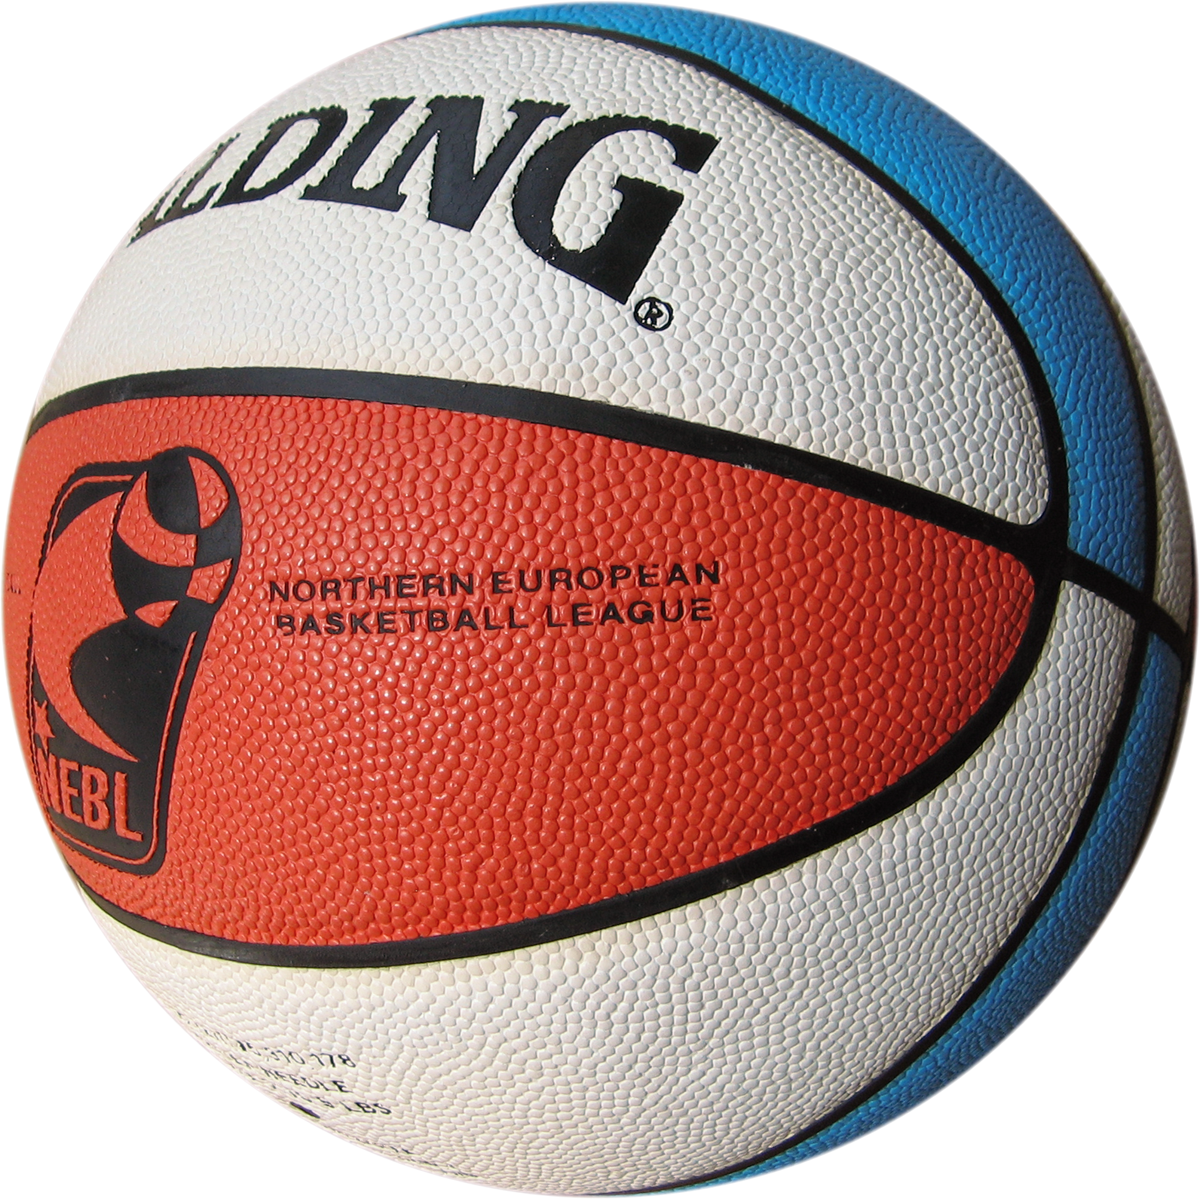 File:NEBL-Spalding-basket-ball.png - Wikimedia Commons